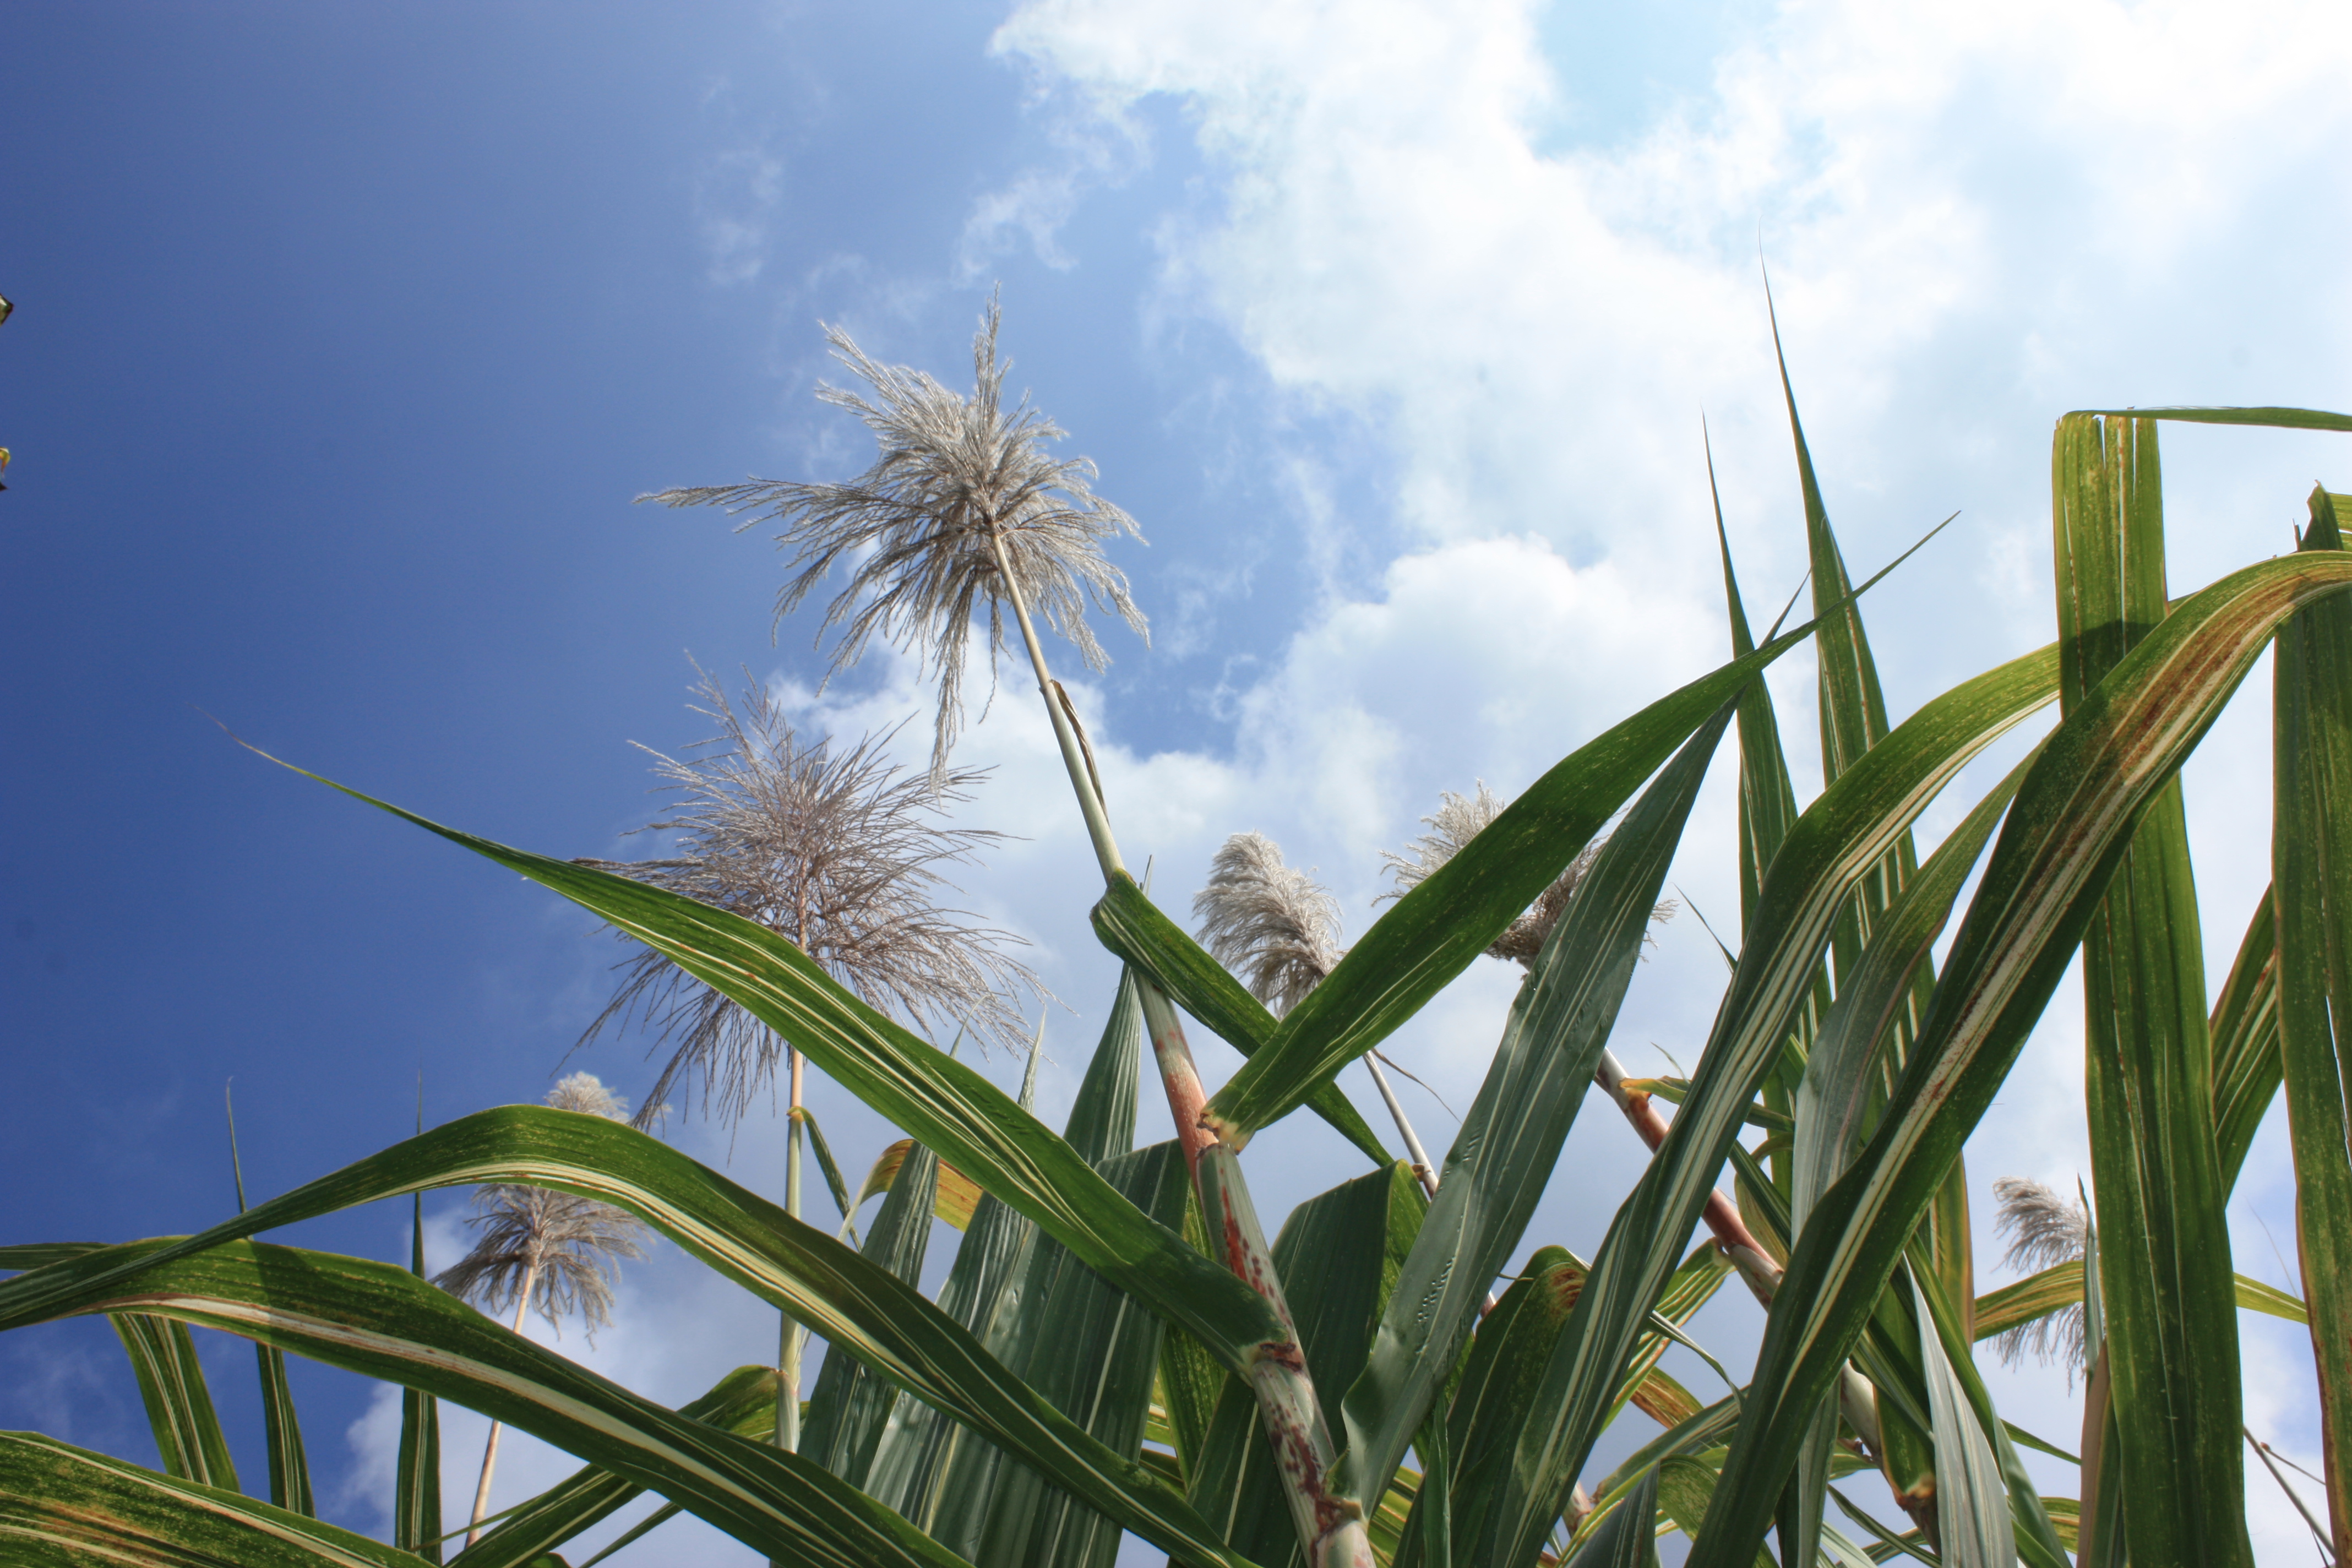 The Sugarcane Plant